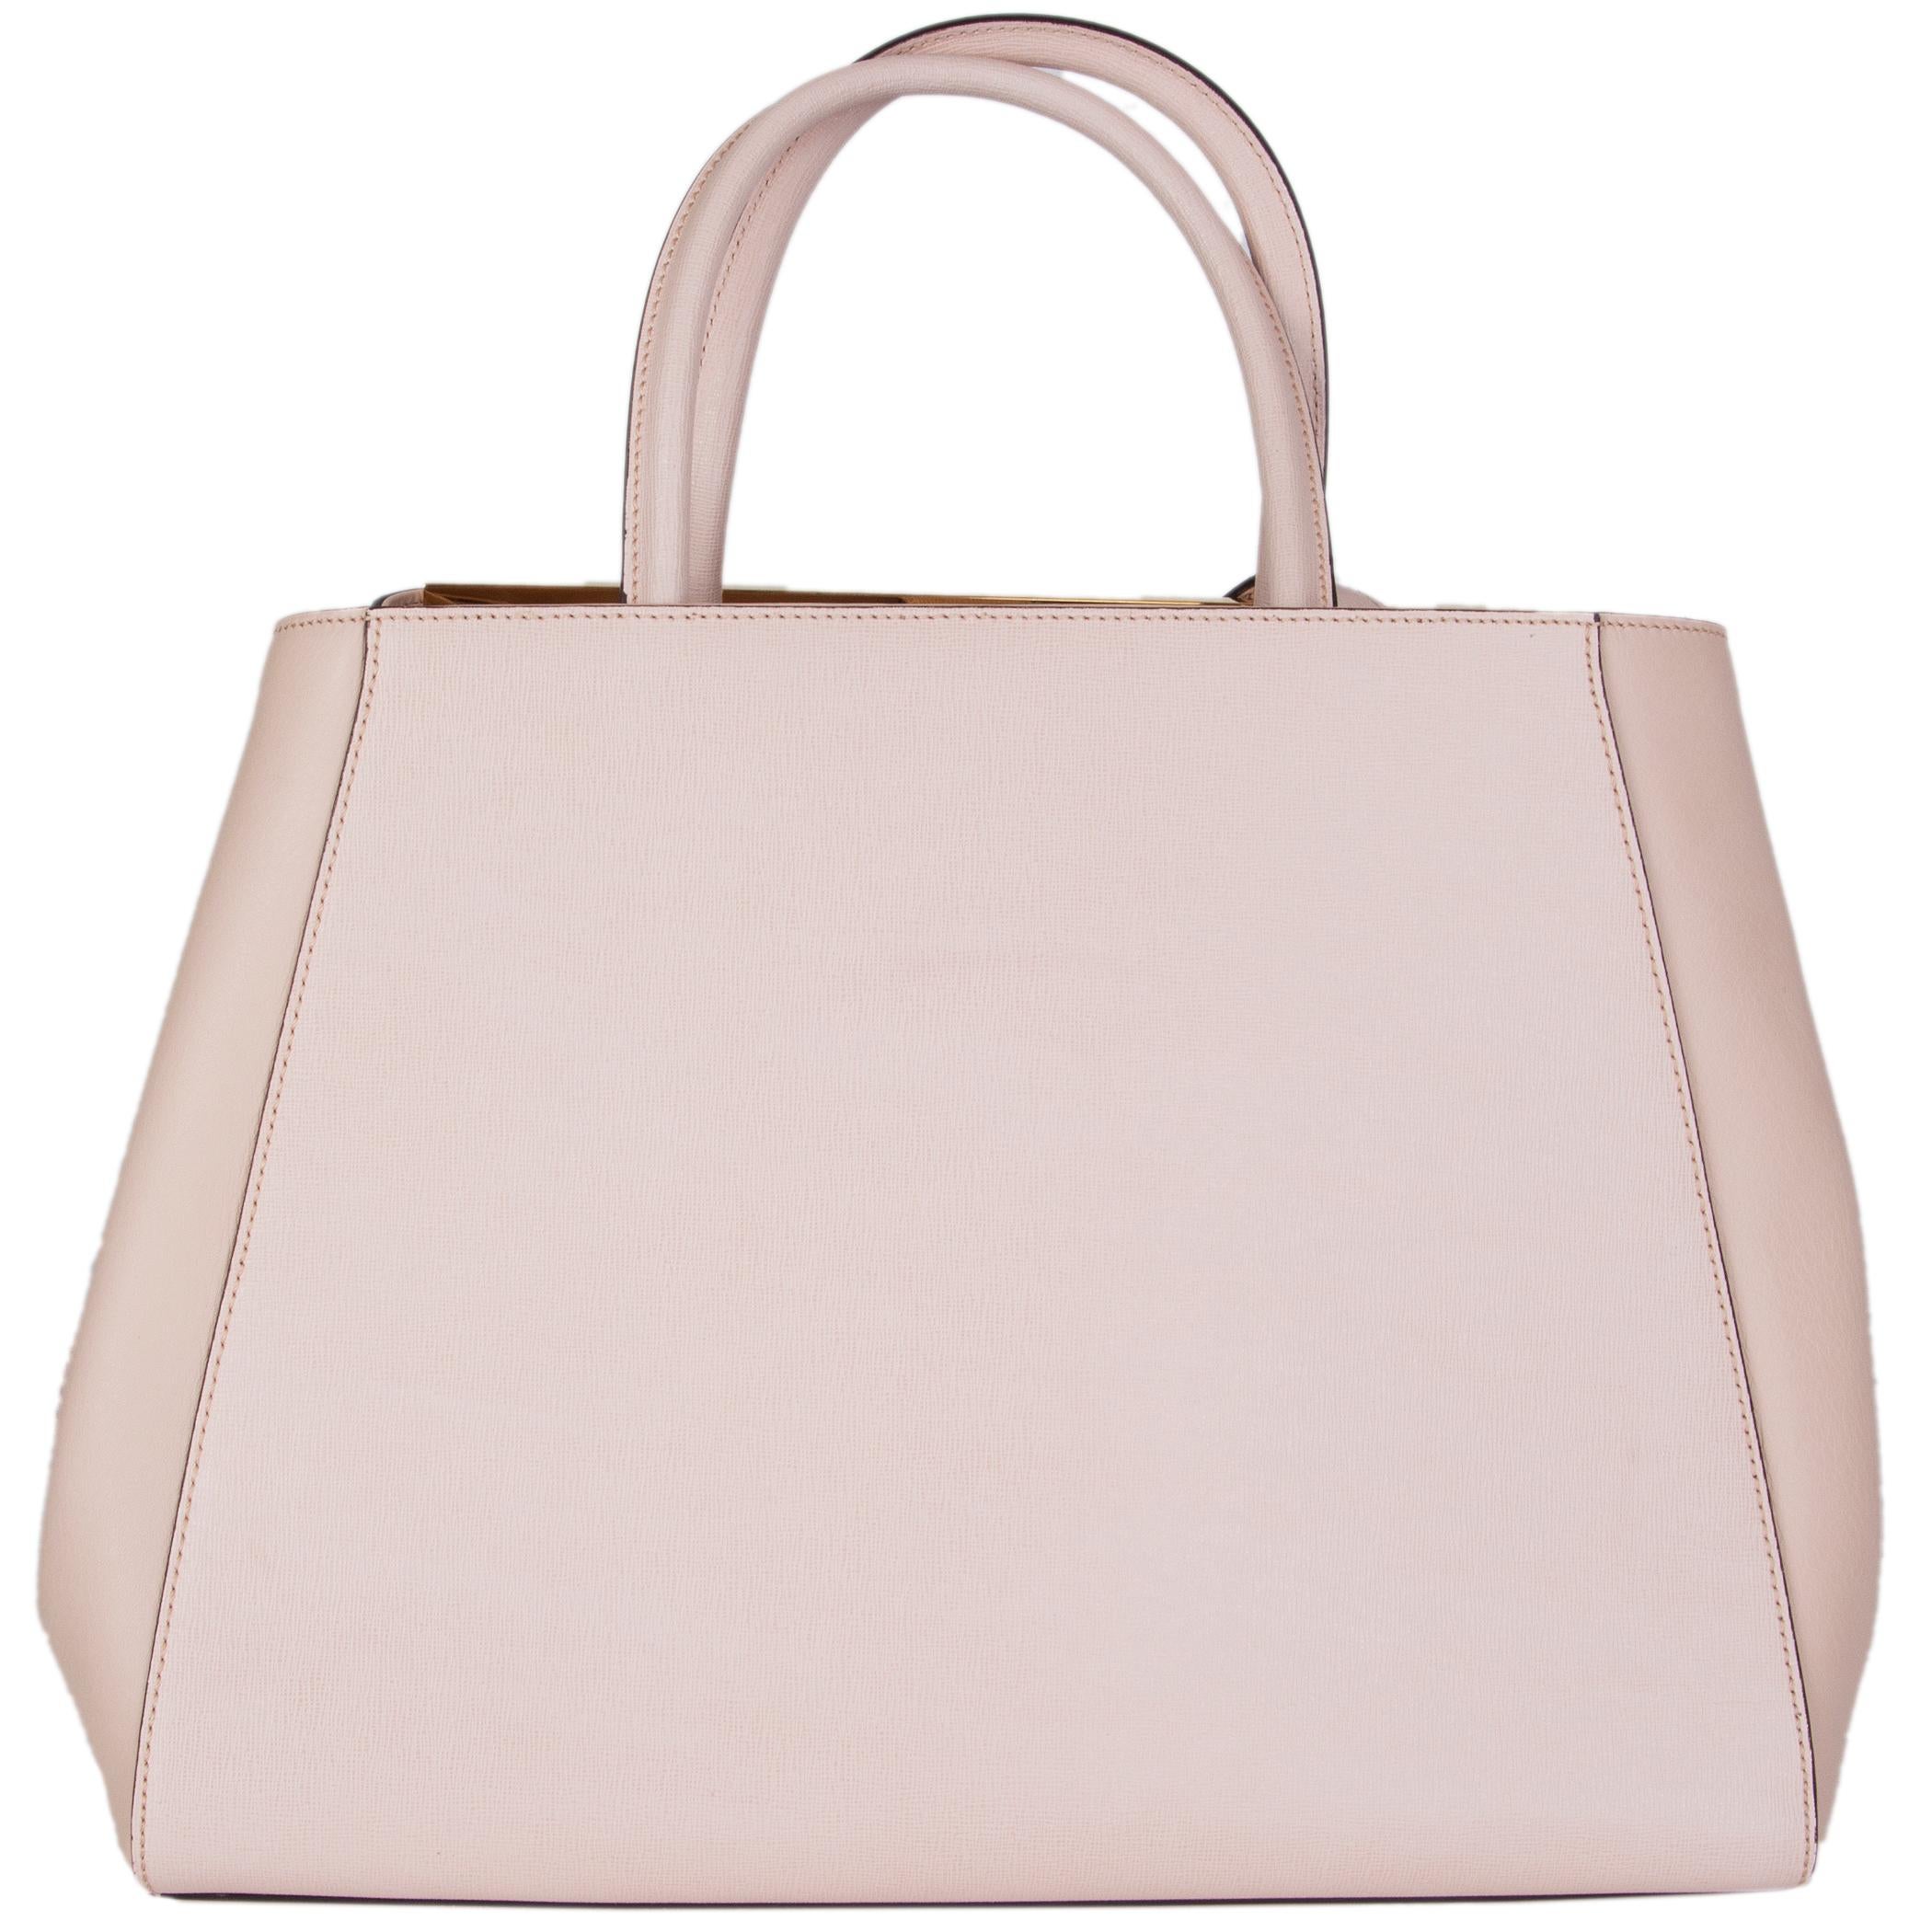 Beige FENDI pink leather TWO TONE 2JOURS MEDIUM TOTE Shoulder Bag